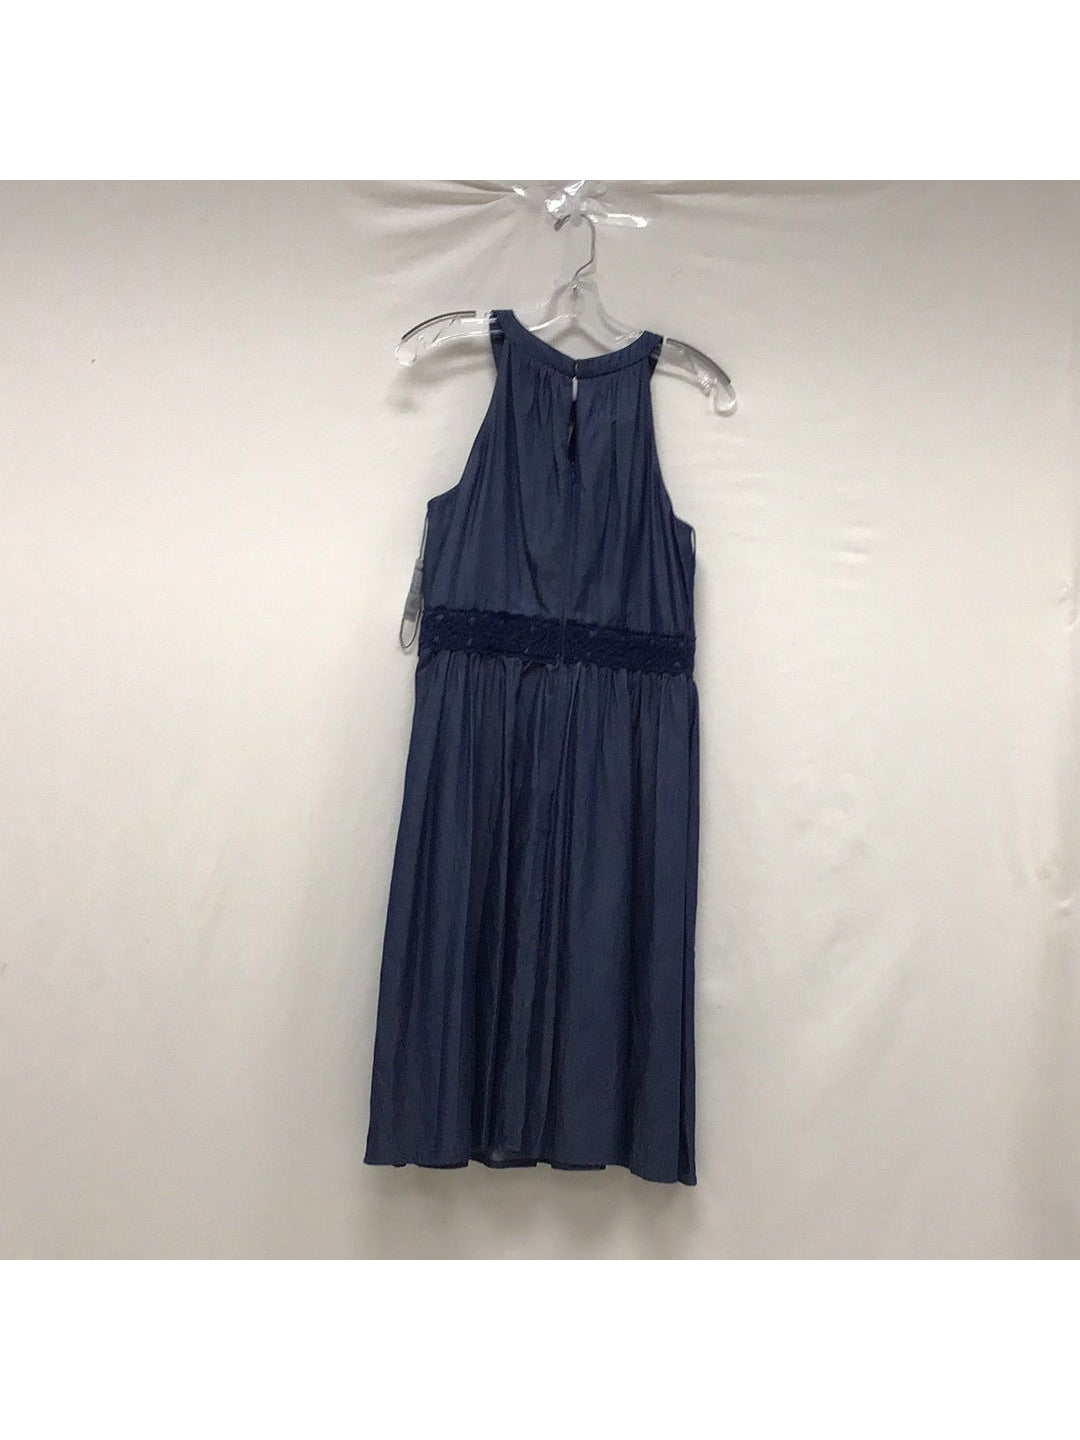 Dressbarn Ladies Size 10 Navy Blue Sleeveless Dress - The Kennedy Collective Thrift - 